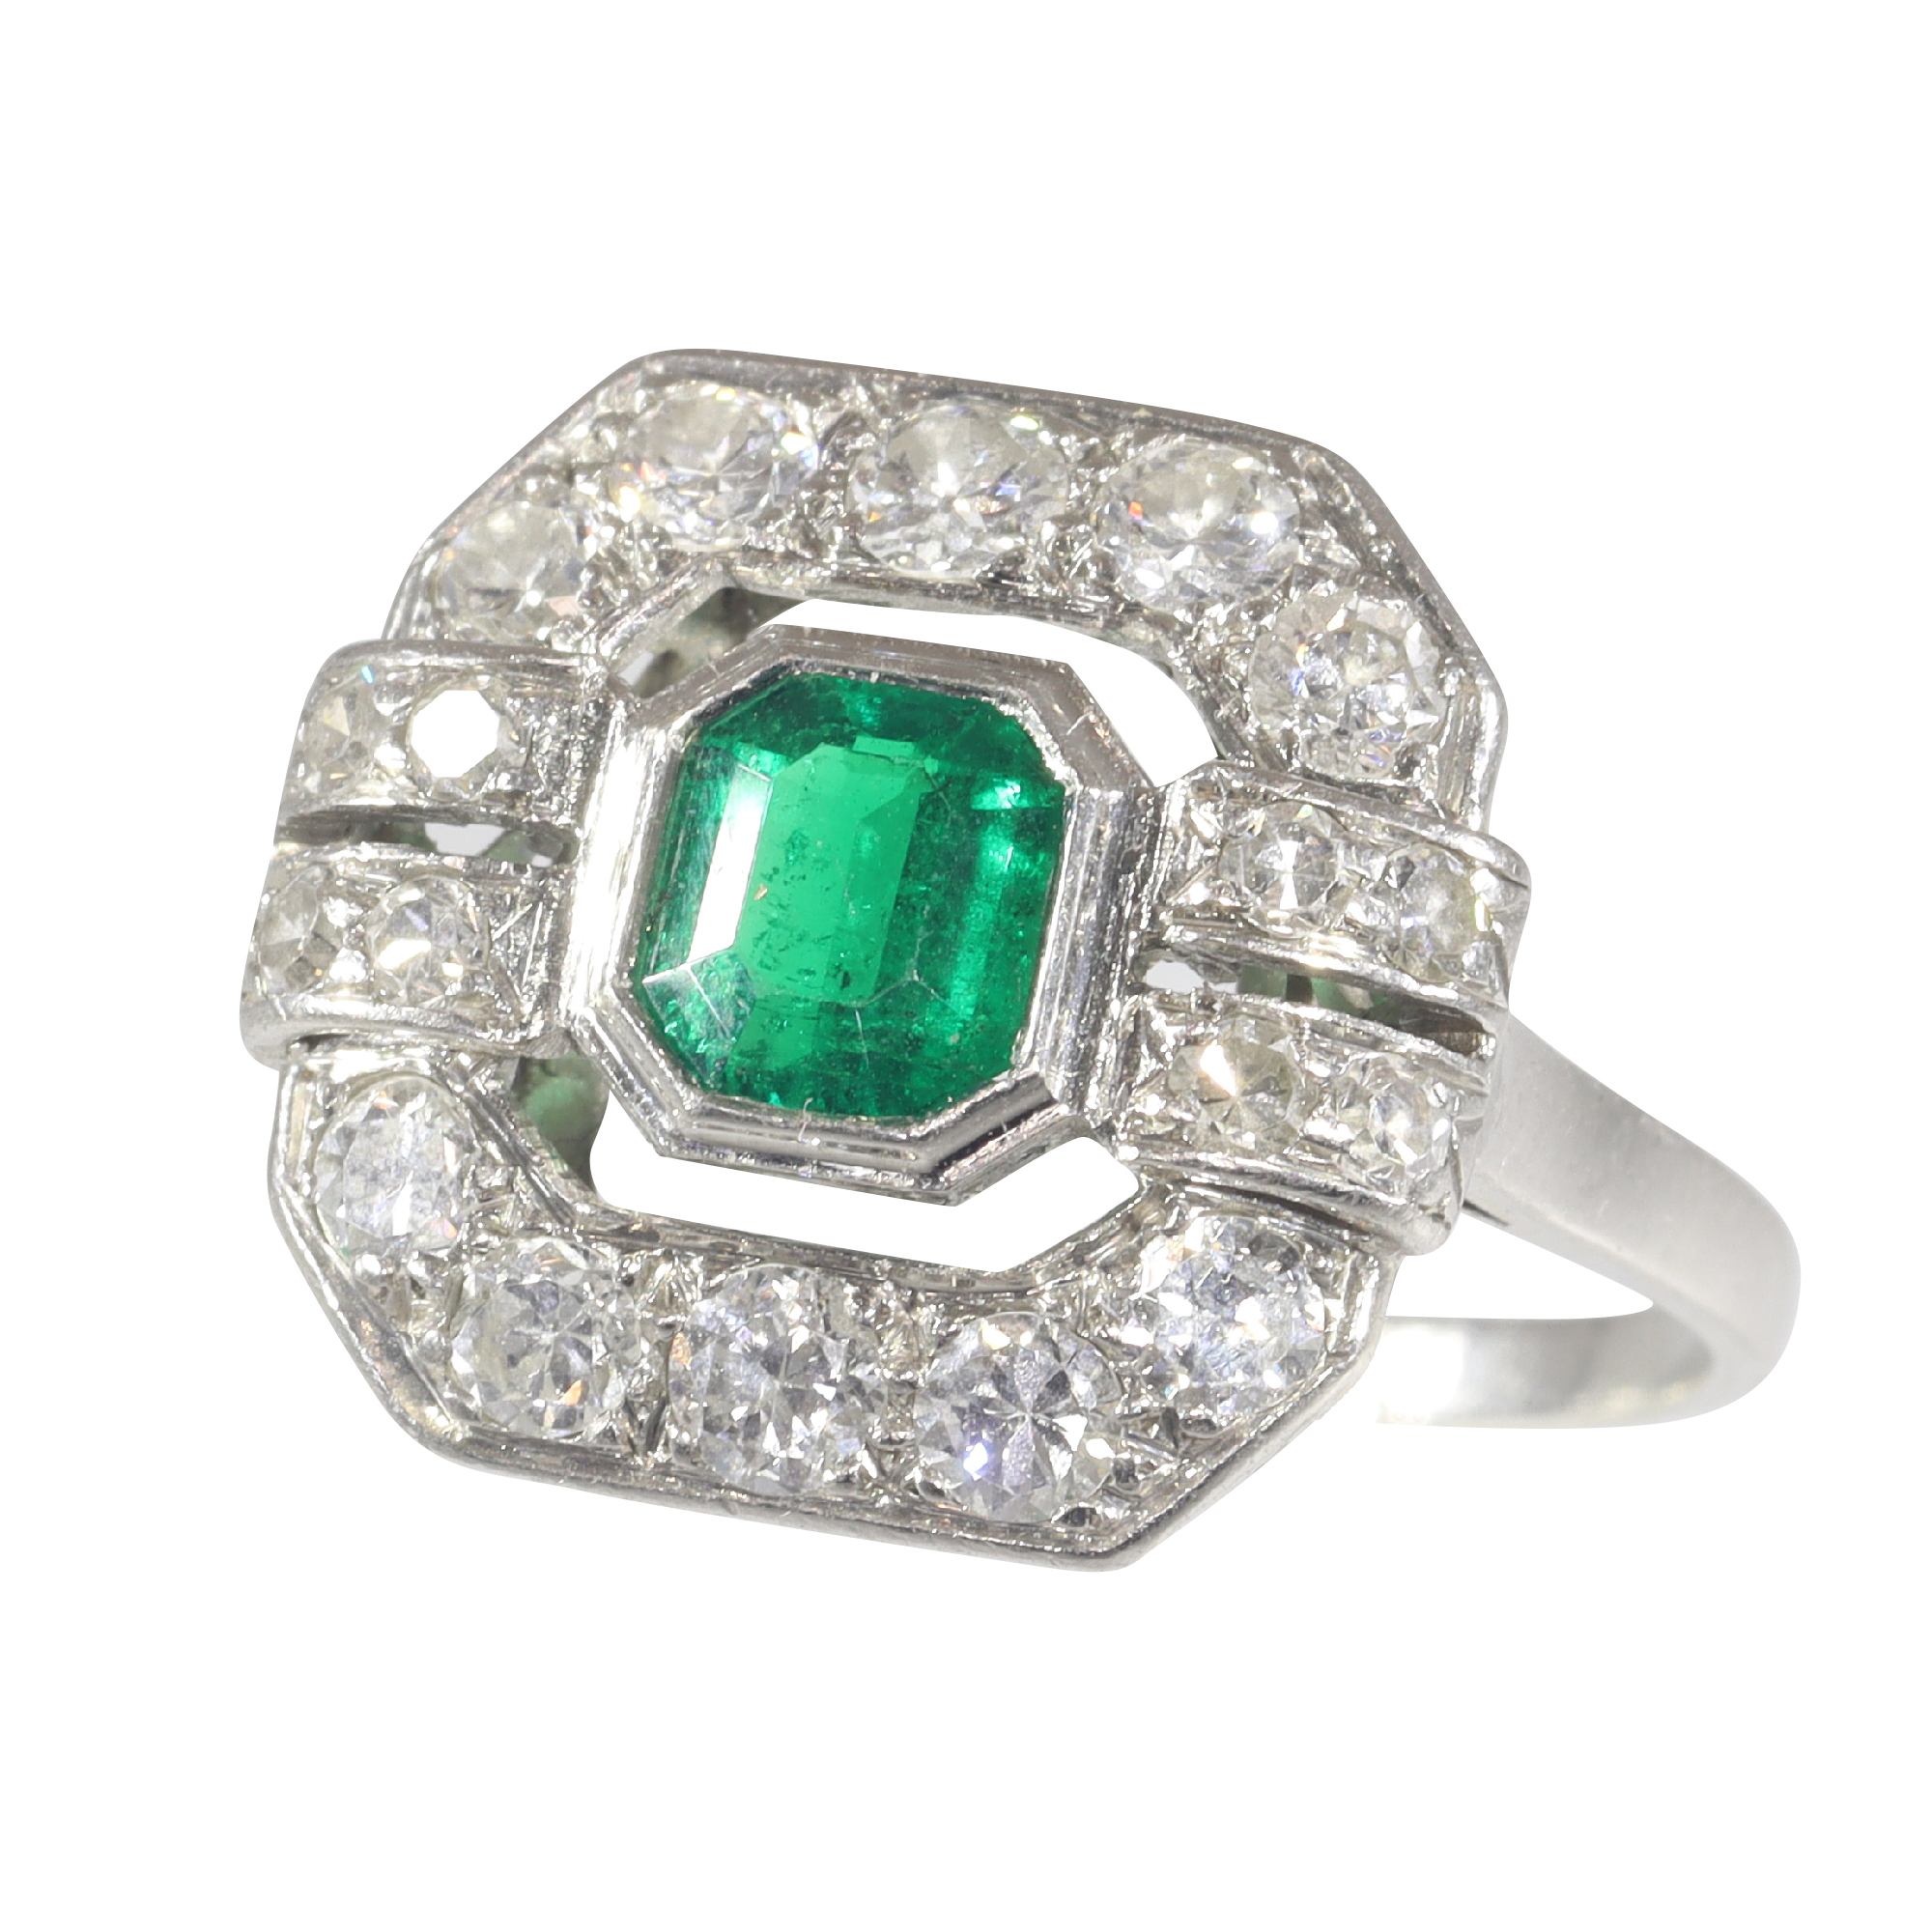 French estate engagement ring platinum diamonds and Brasilian emerald